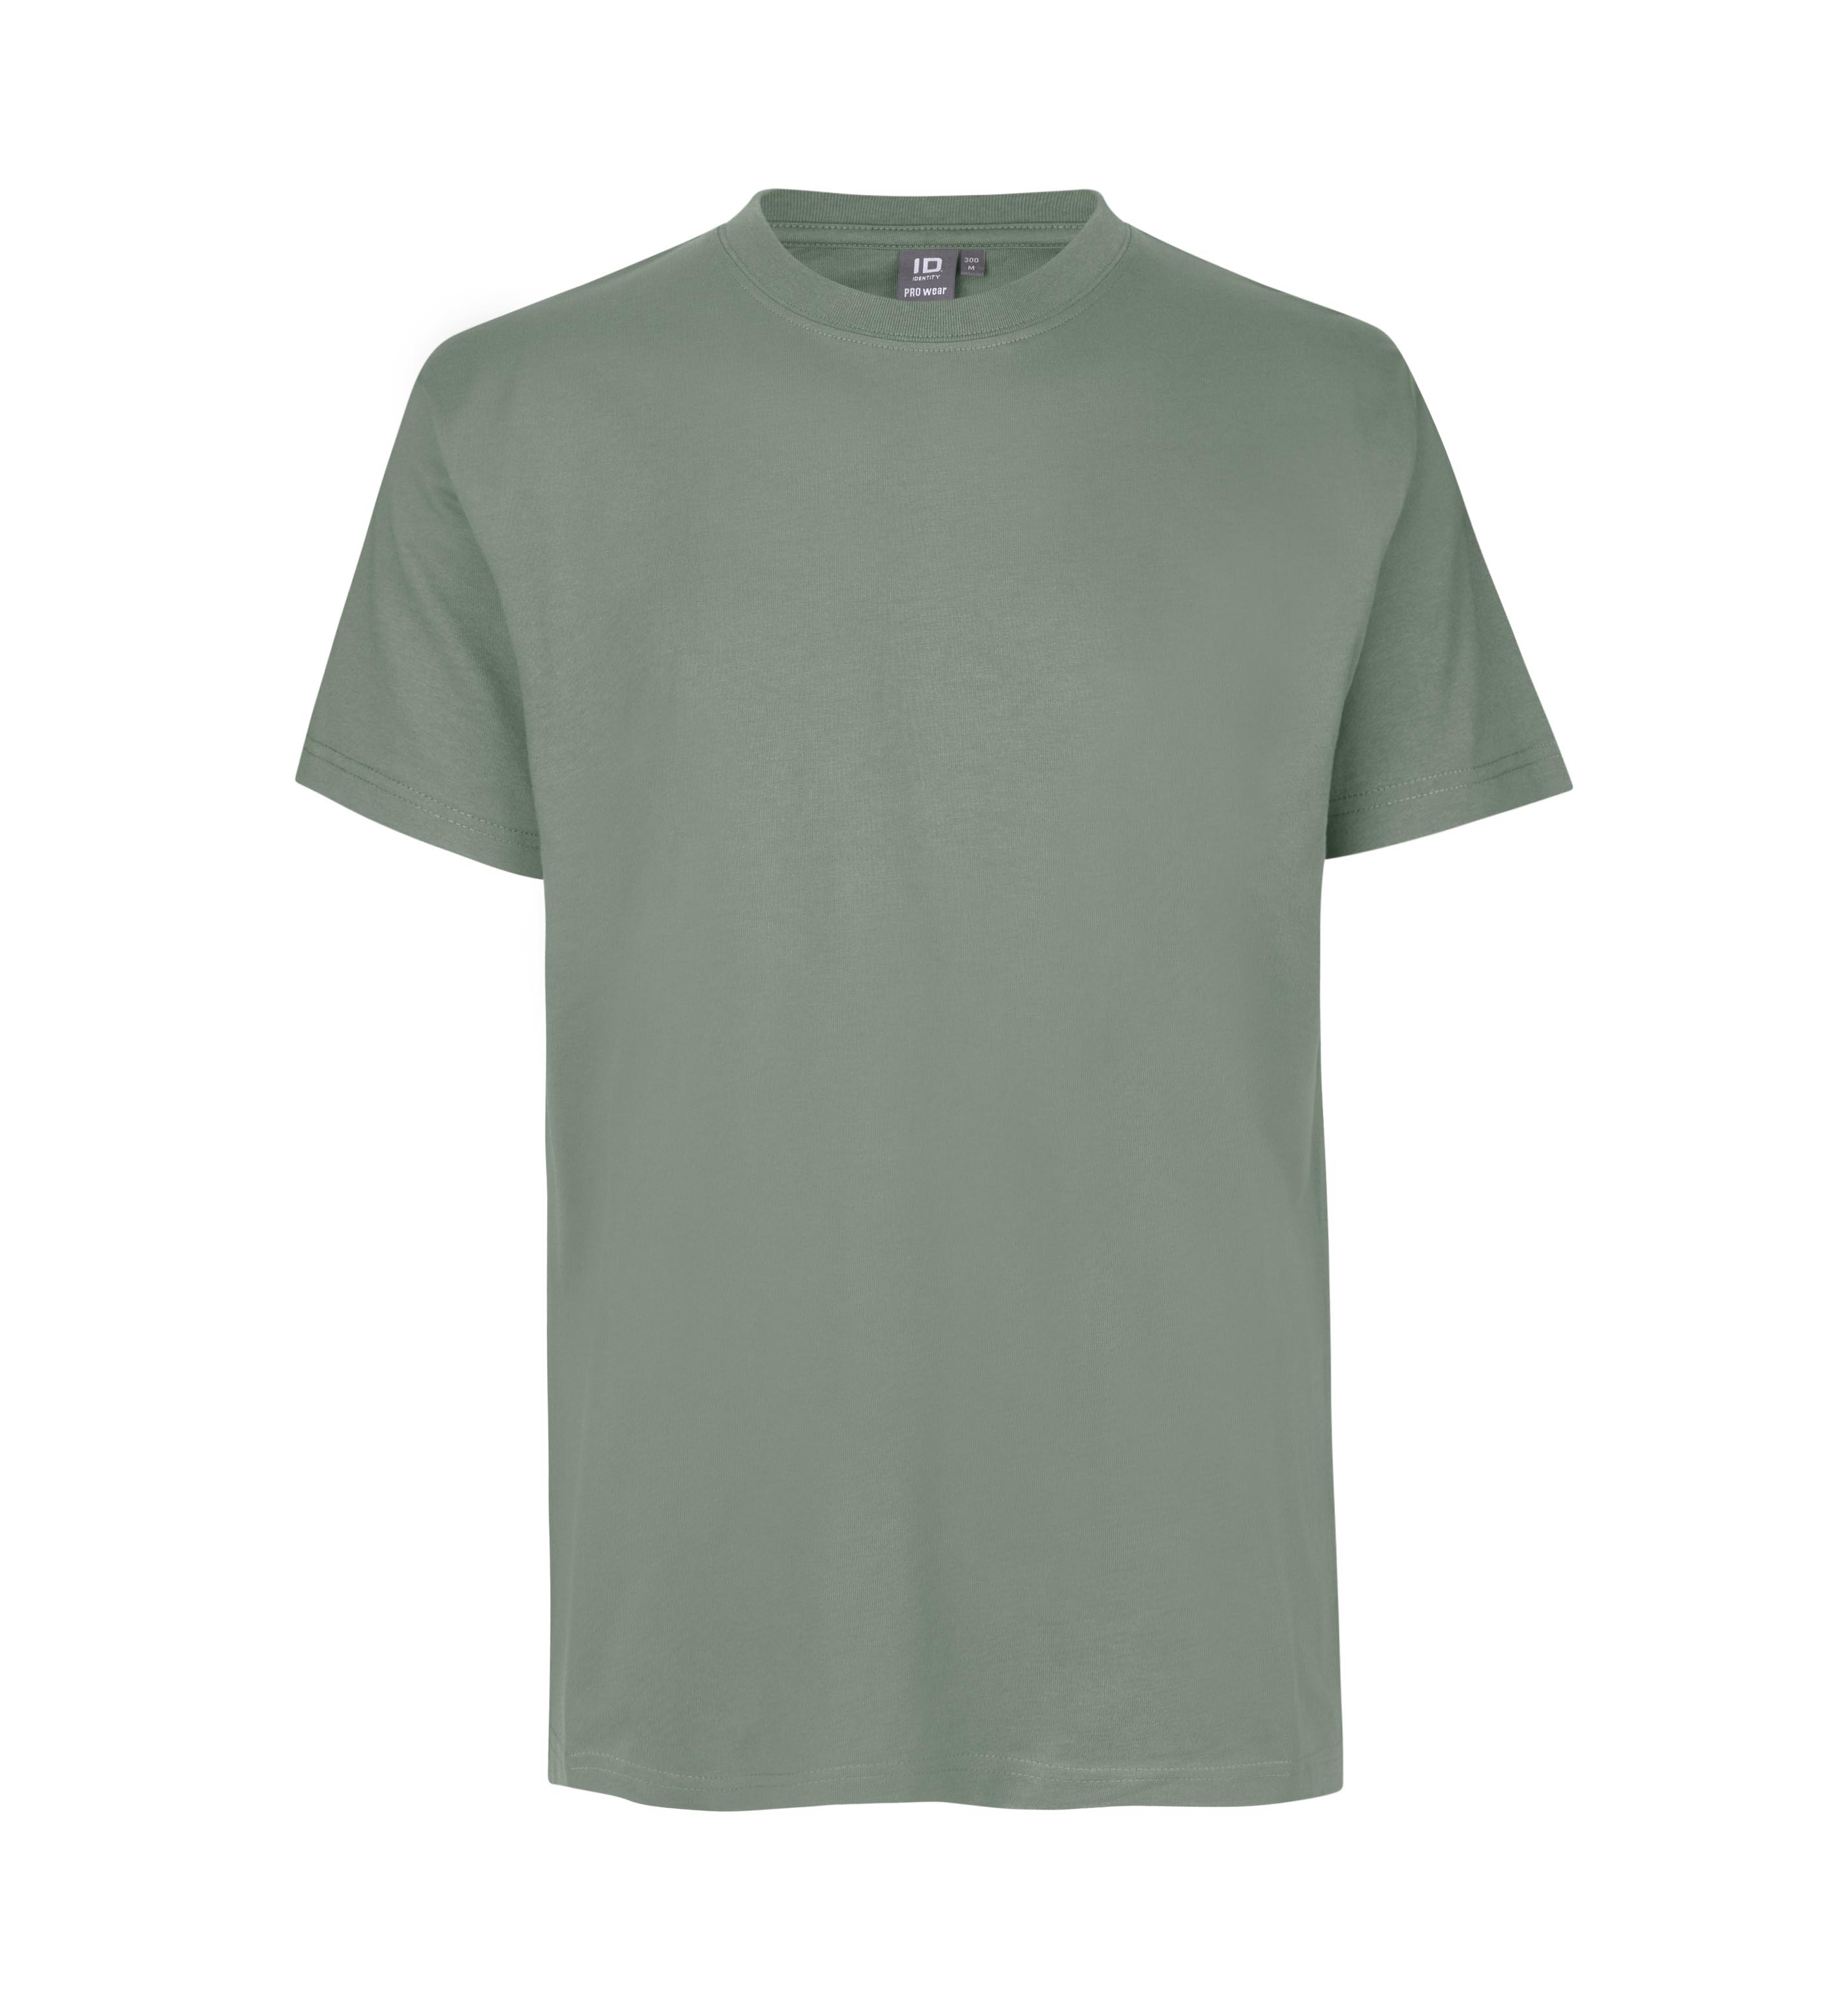 PRO Wear work T-shirt 210-220 g/m² ID Identity® Old green M